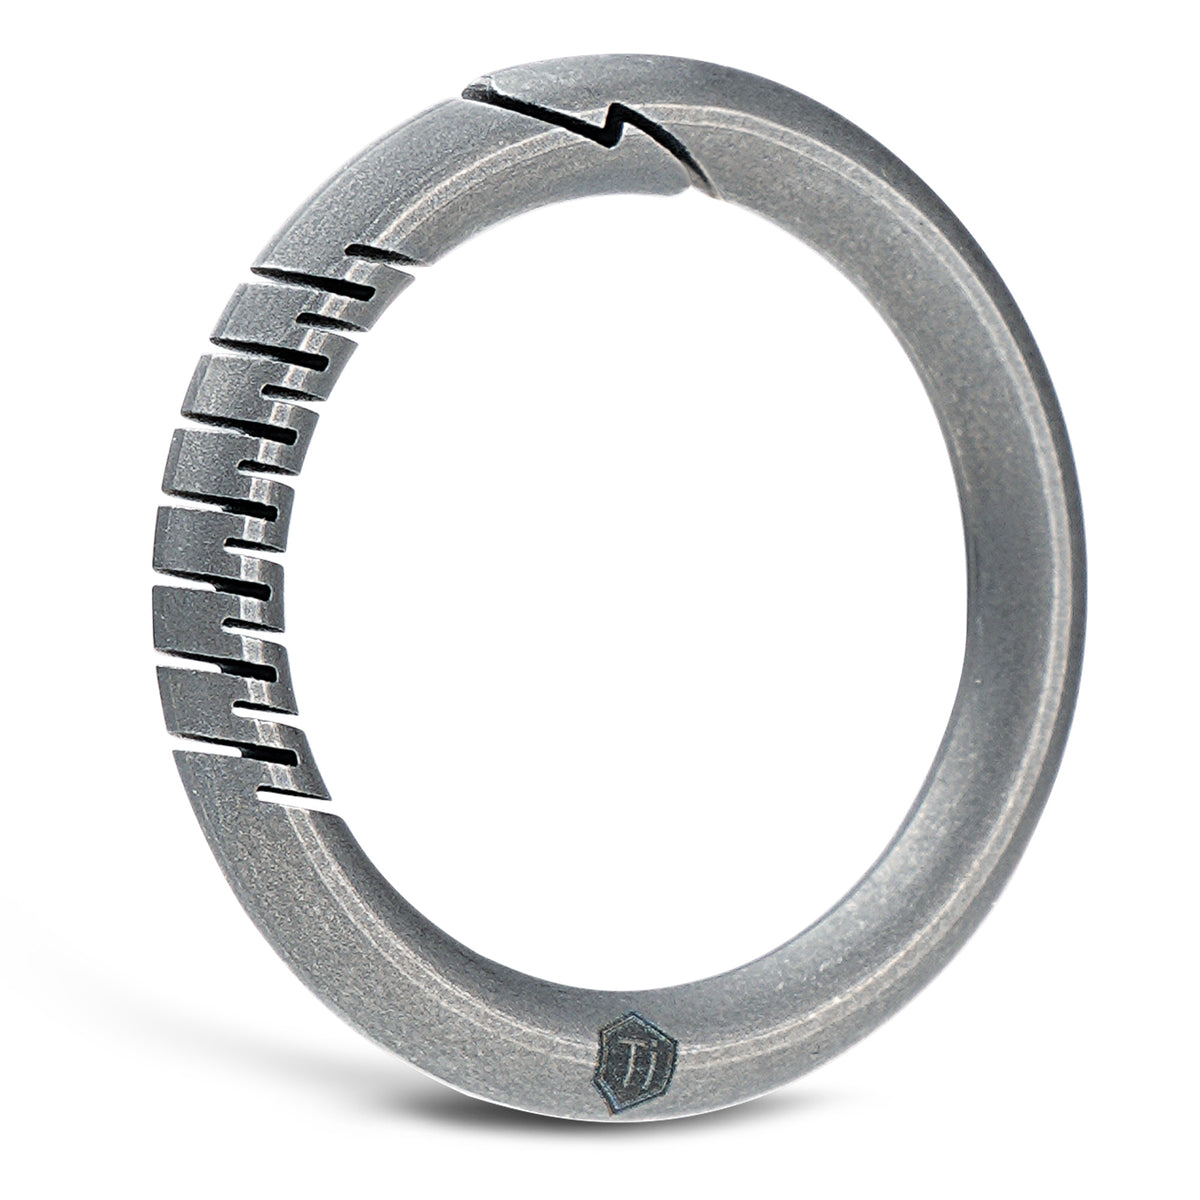 KA34 Titanium Side Pushing Key Ring